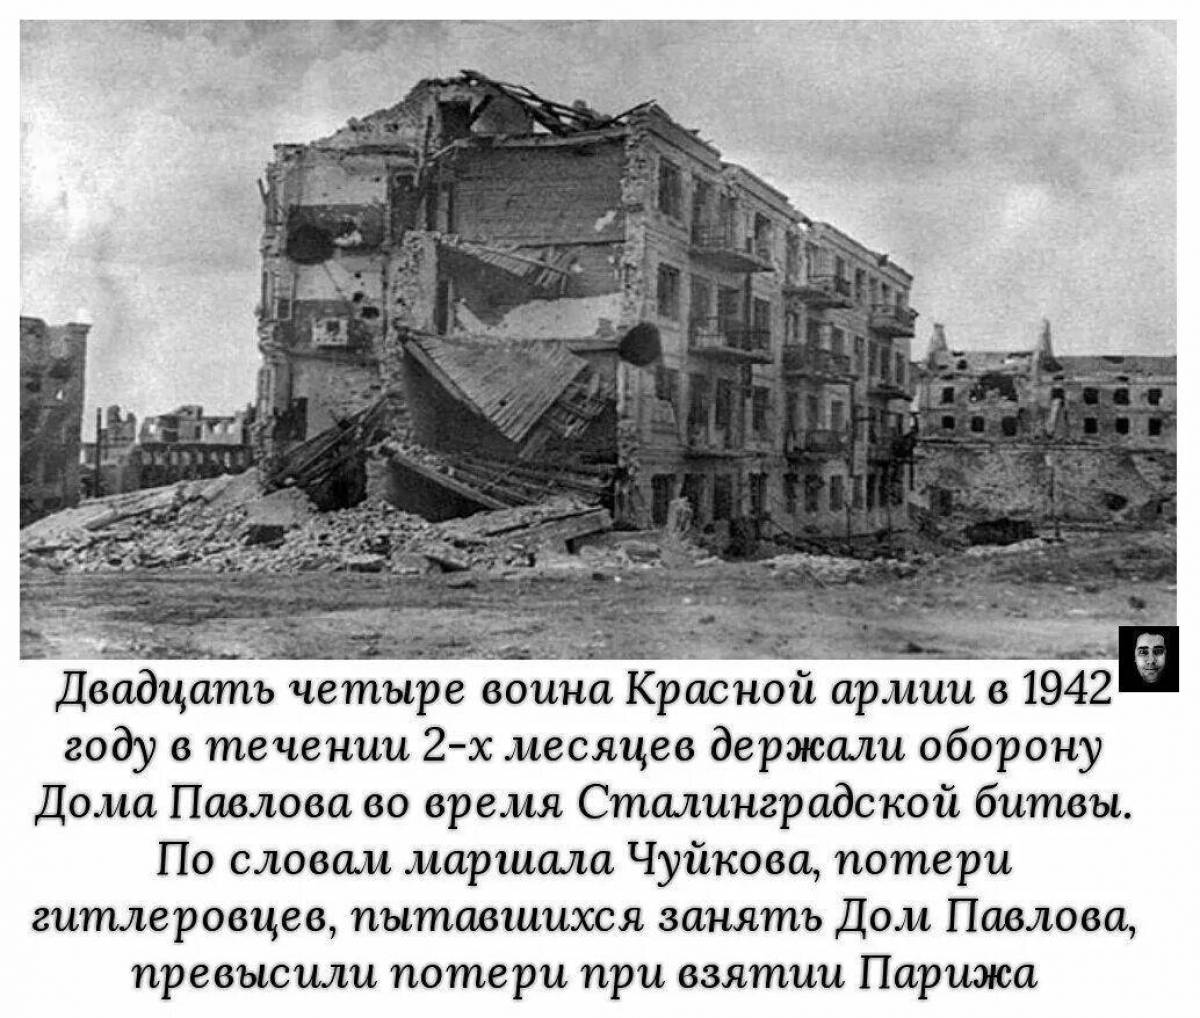 Wonderful Stalingrad pavlov's house